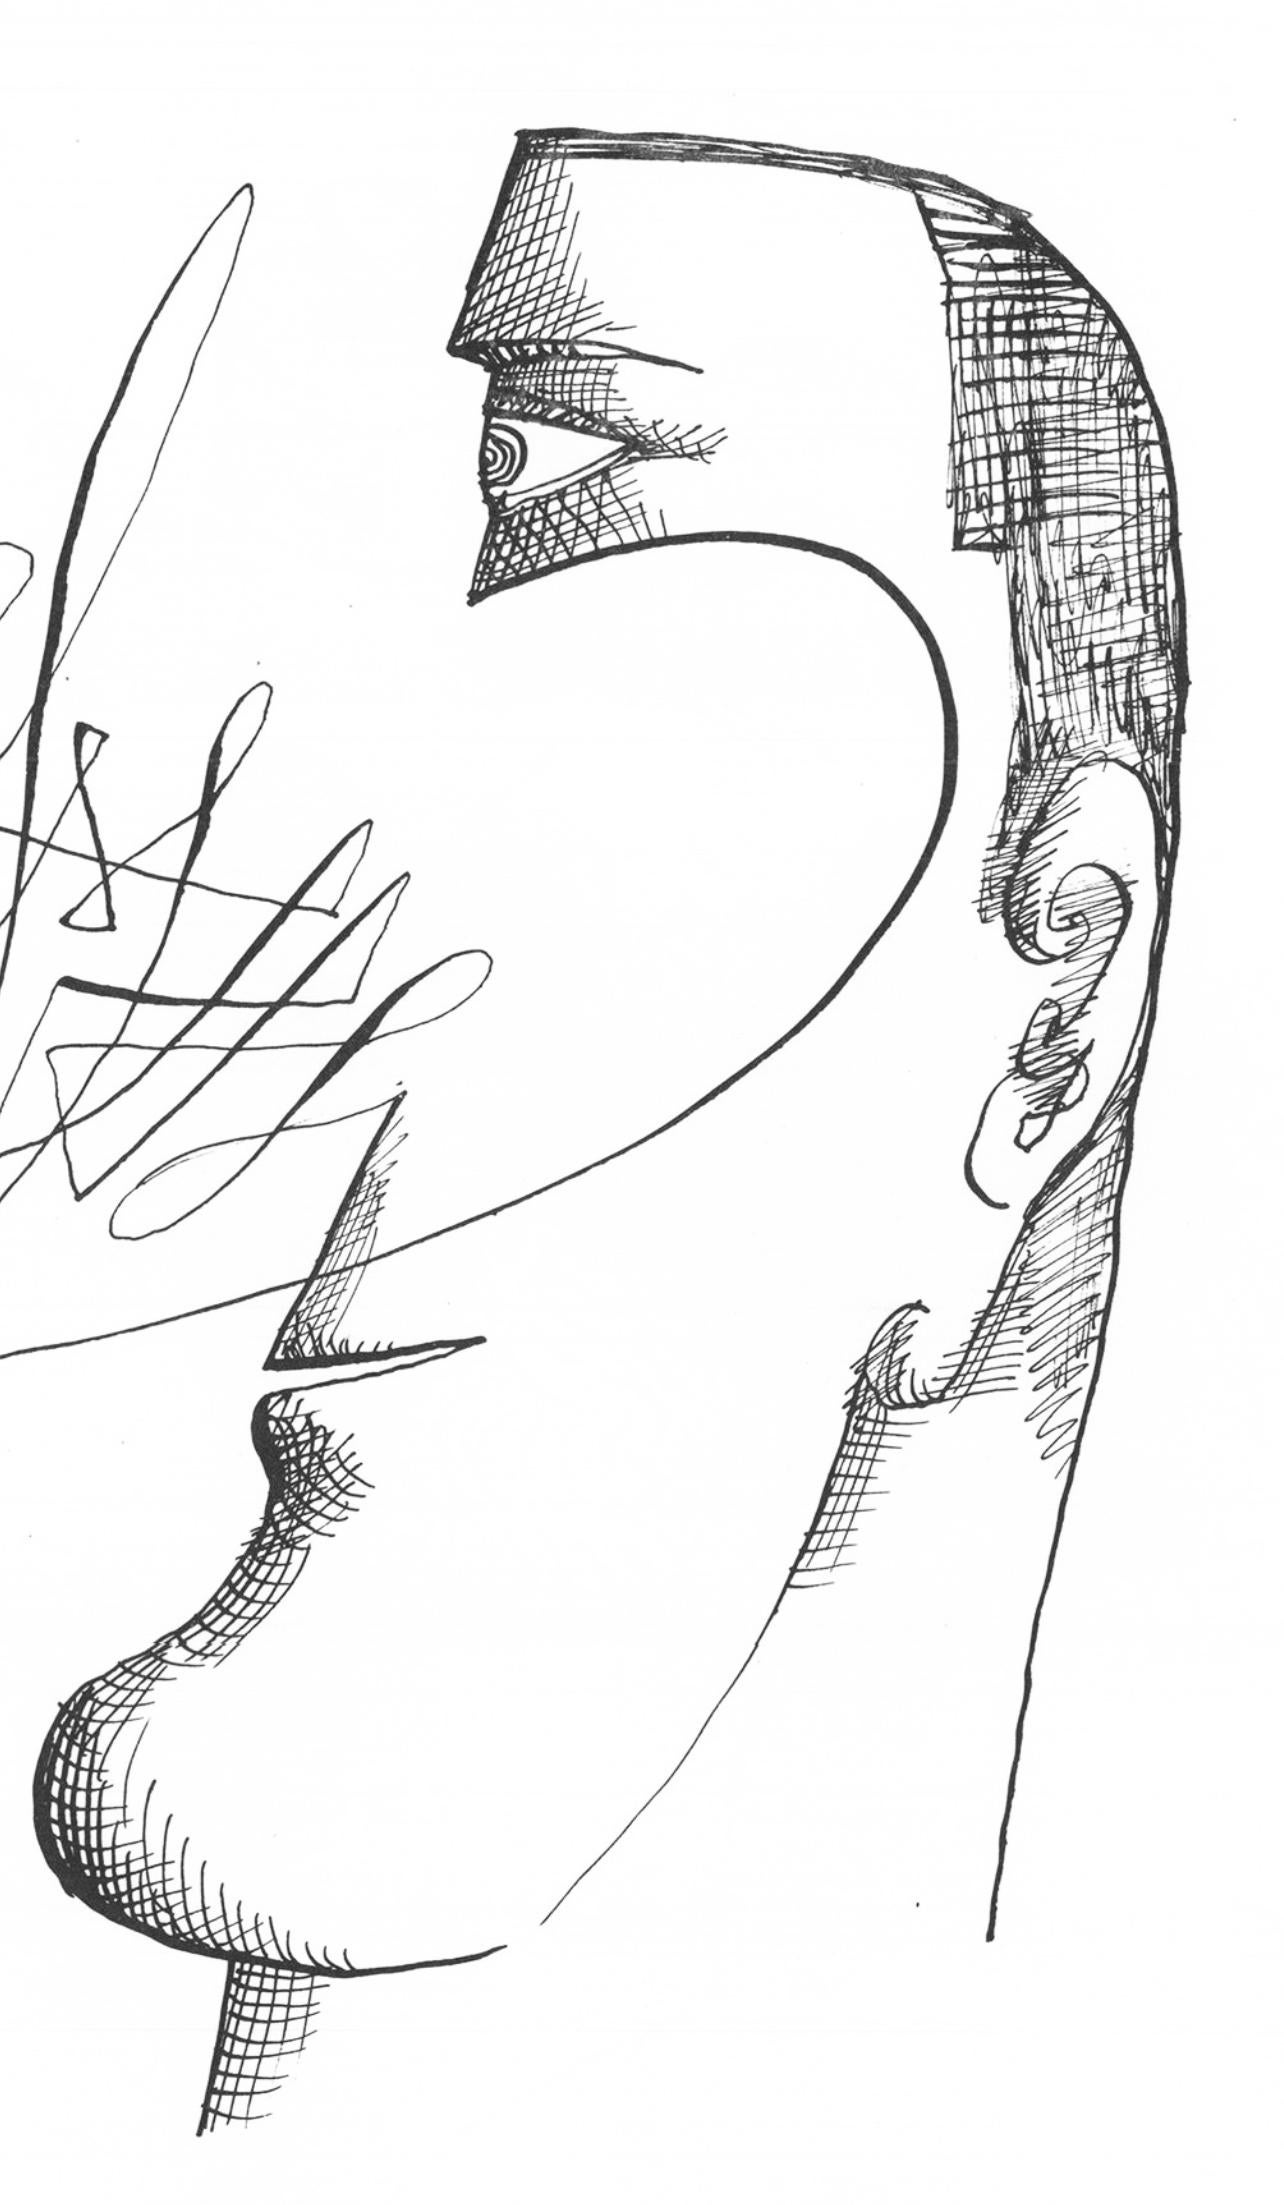 Steinberg, Illustration, Derrière le miroir (after) - Print by Saul Steinberg